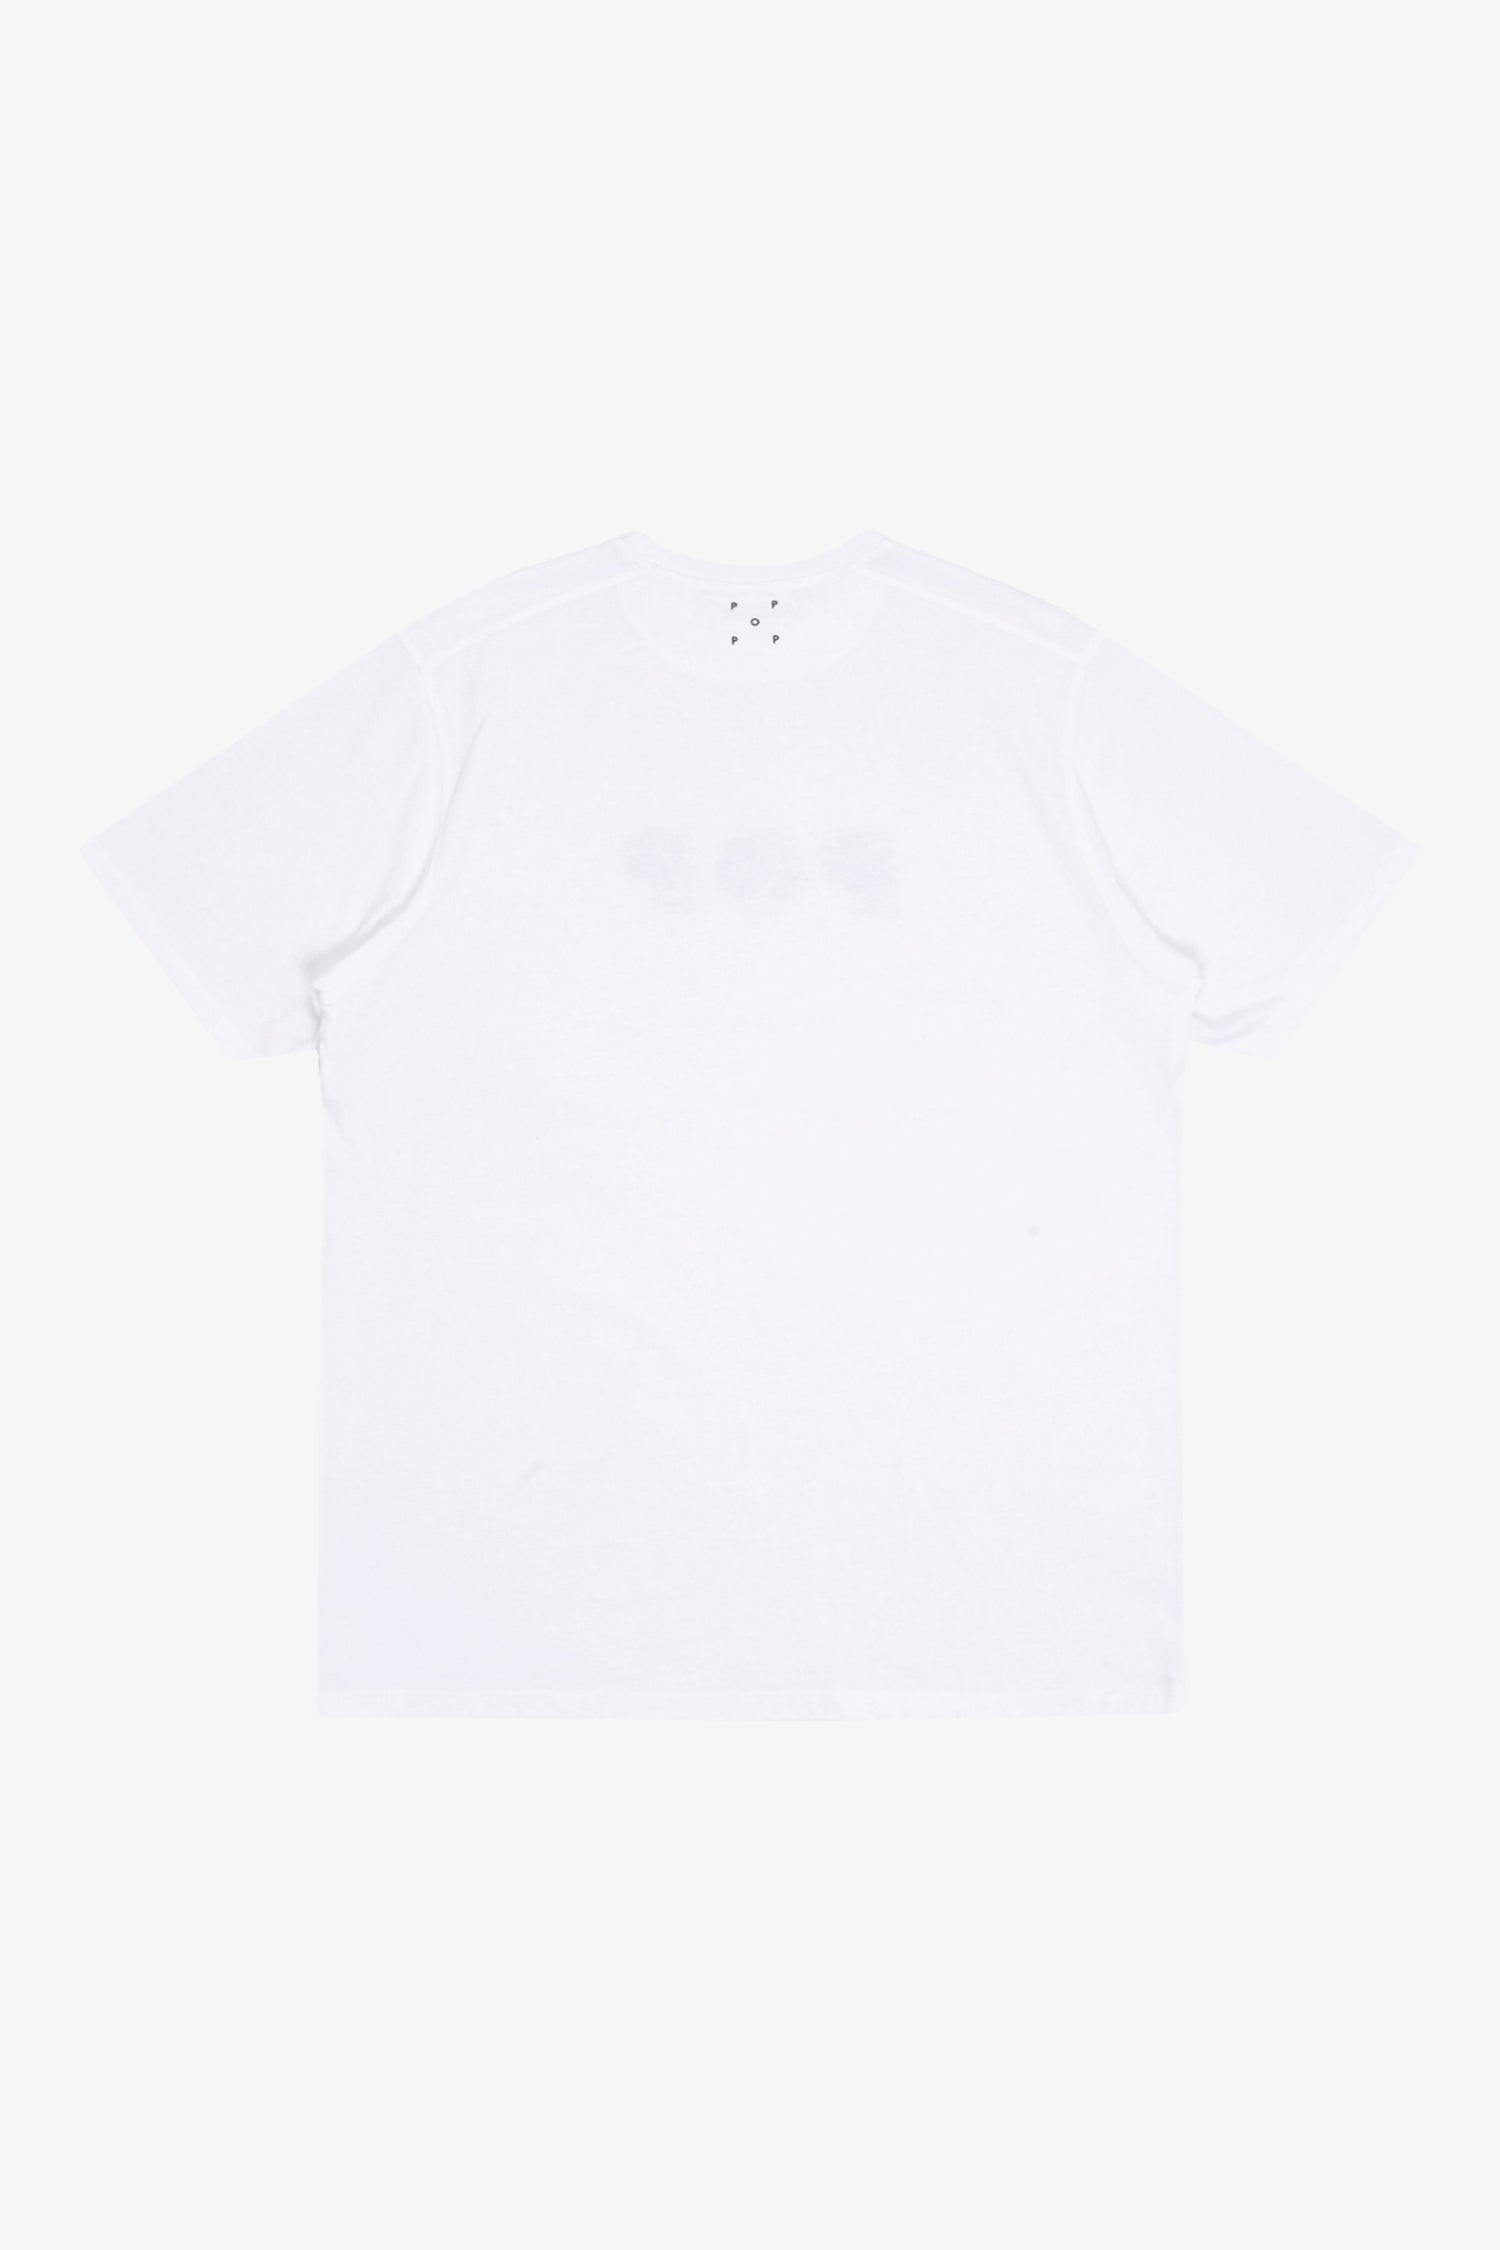 Joost Swarte Logo T-Shirt- Selectshop FRAME